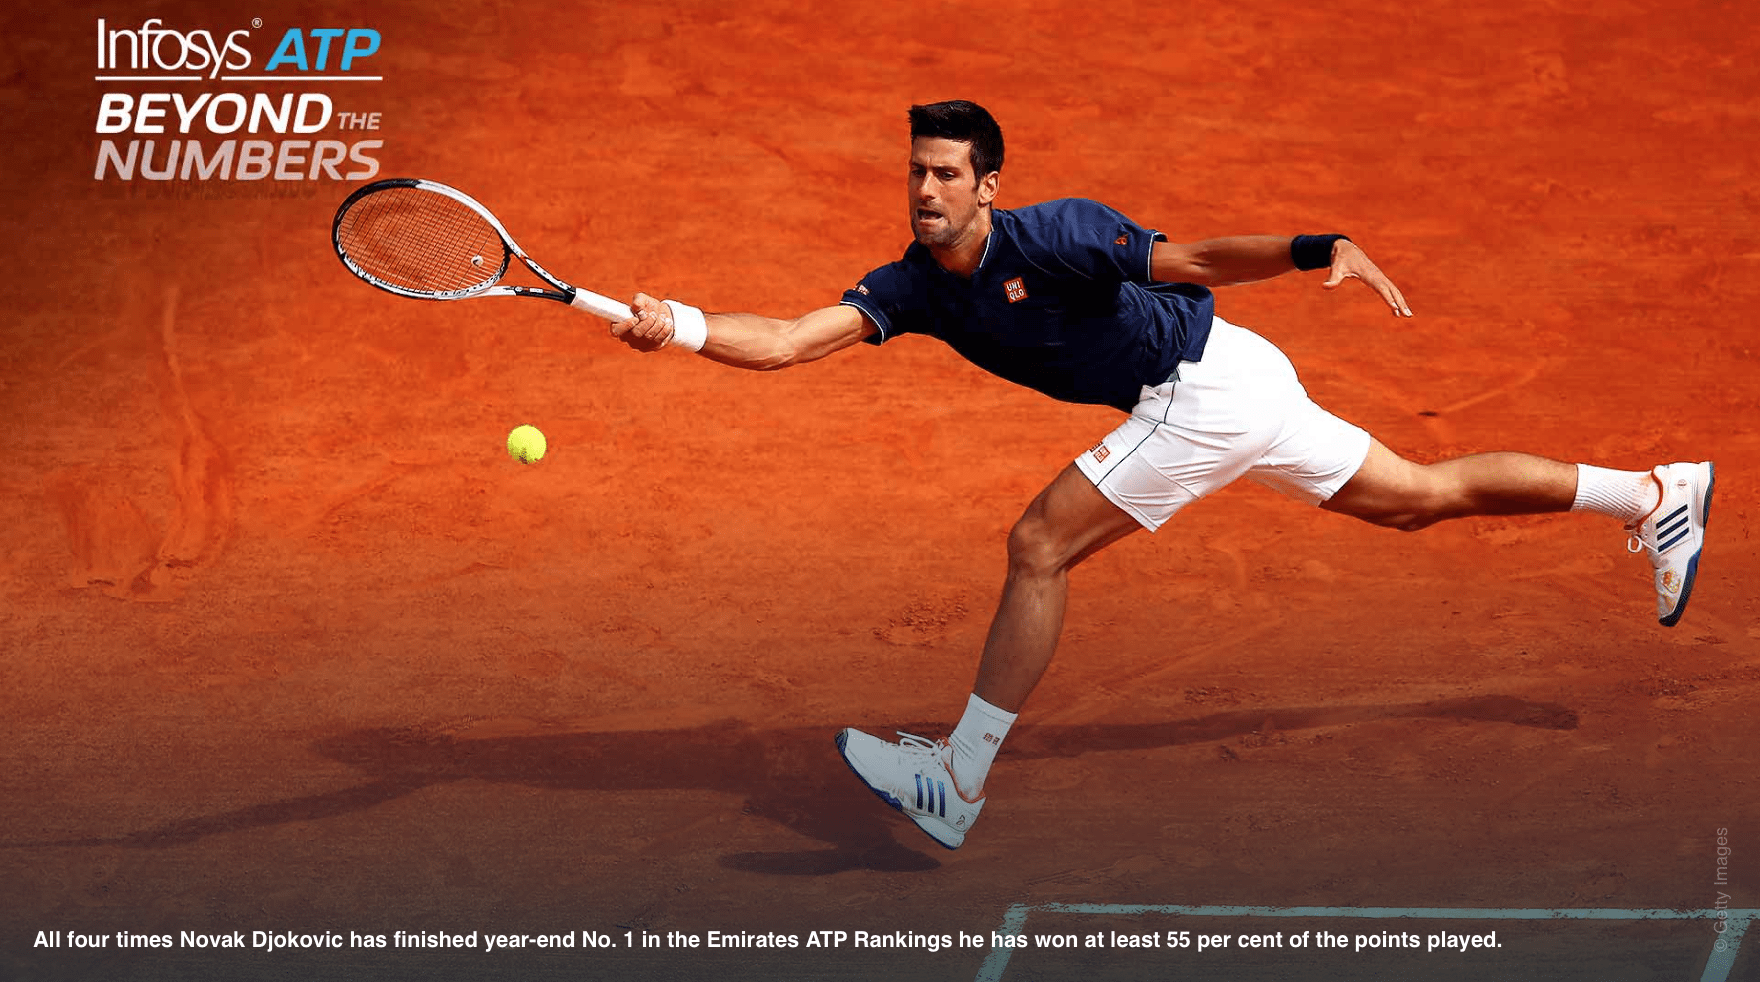 Novak Djokovic hits a forehand playing percentage tennis